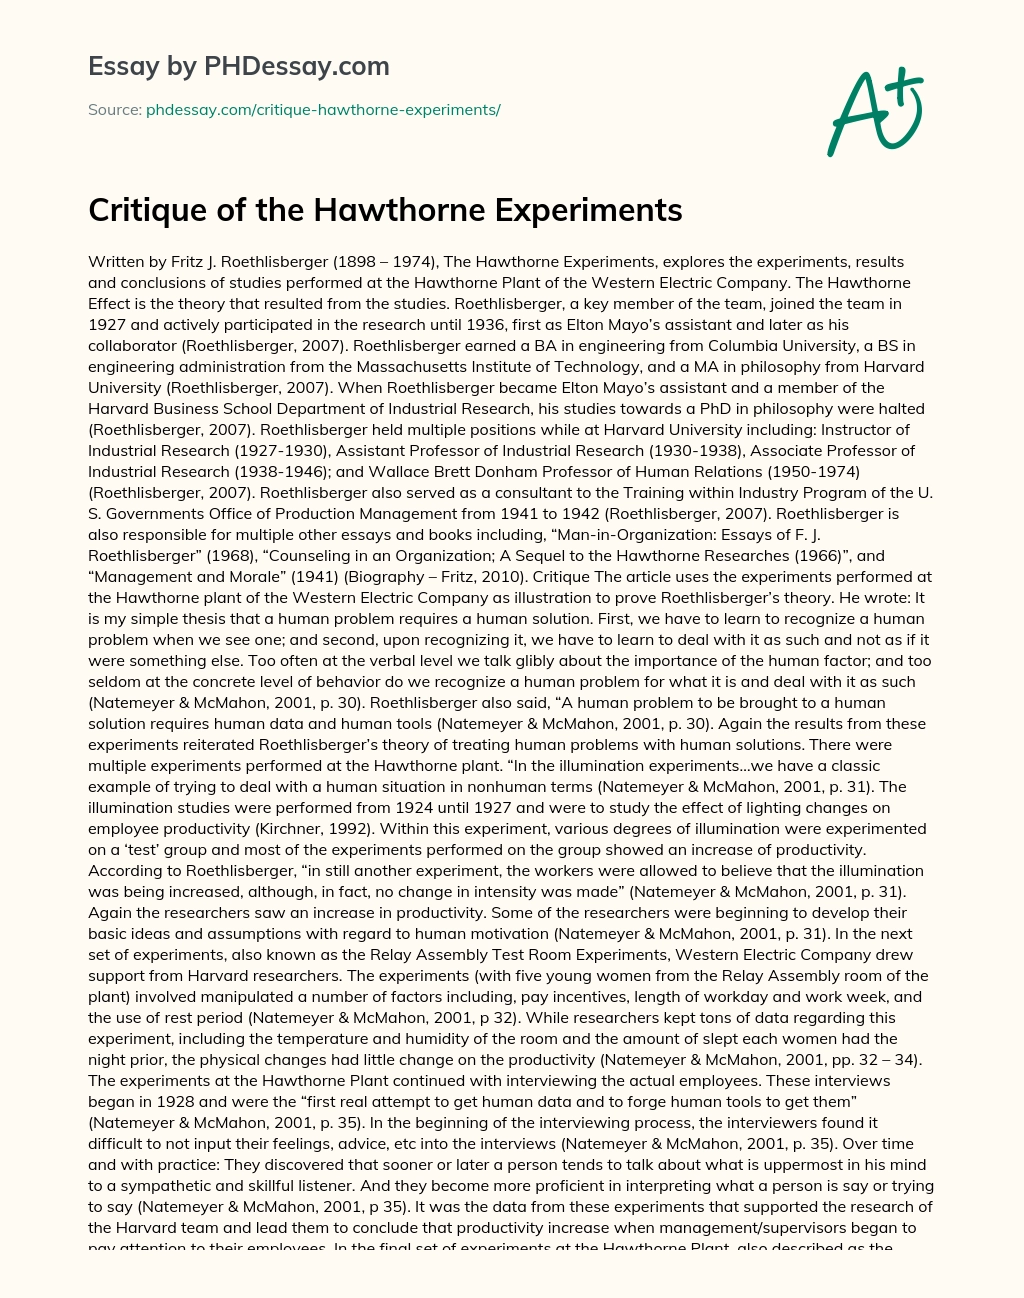 Critique of the Hawthorne Experiments essay